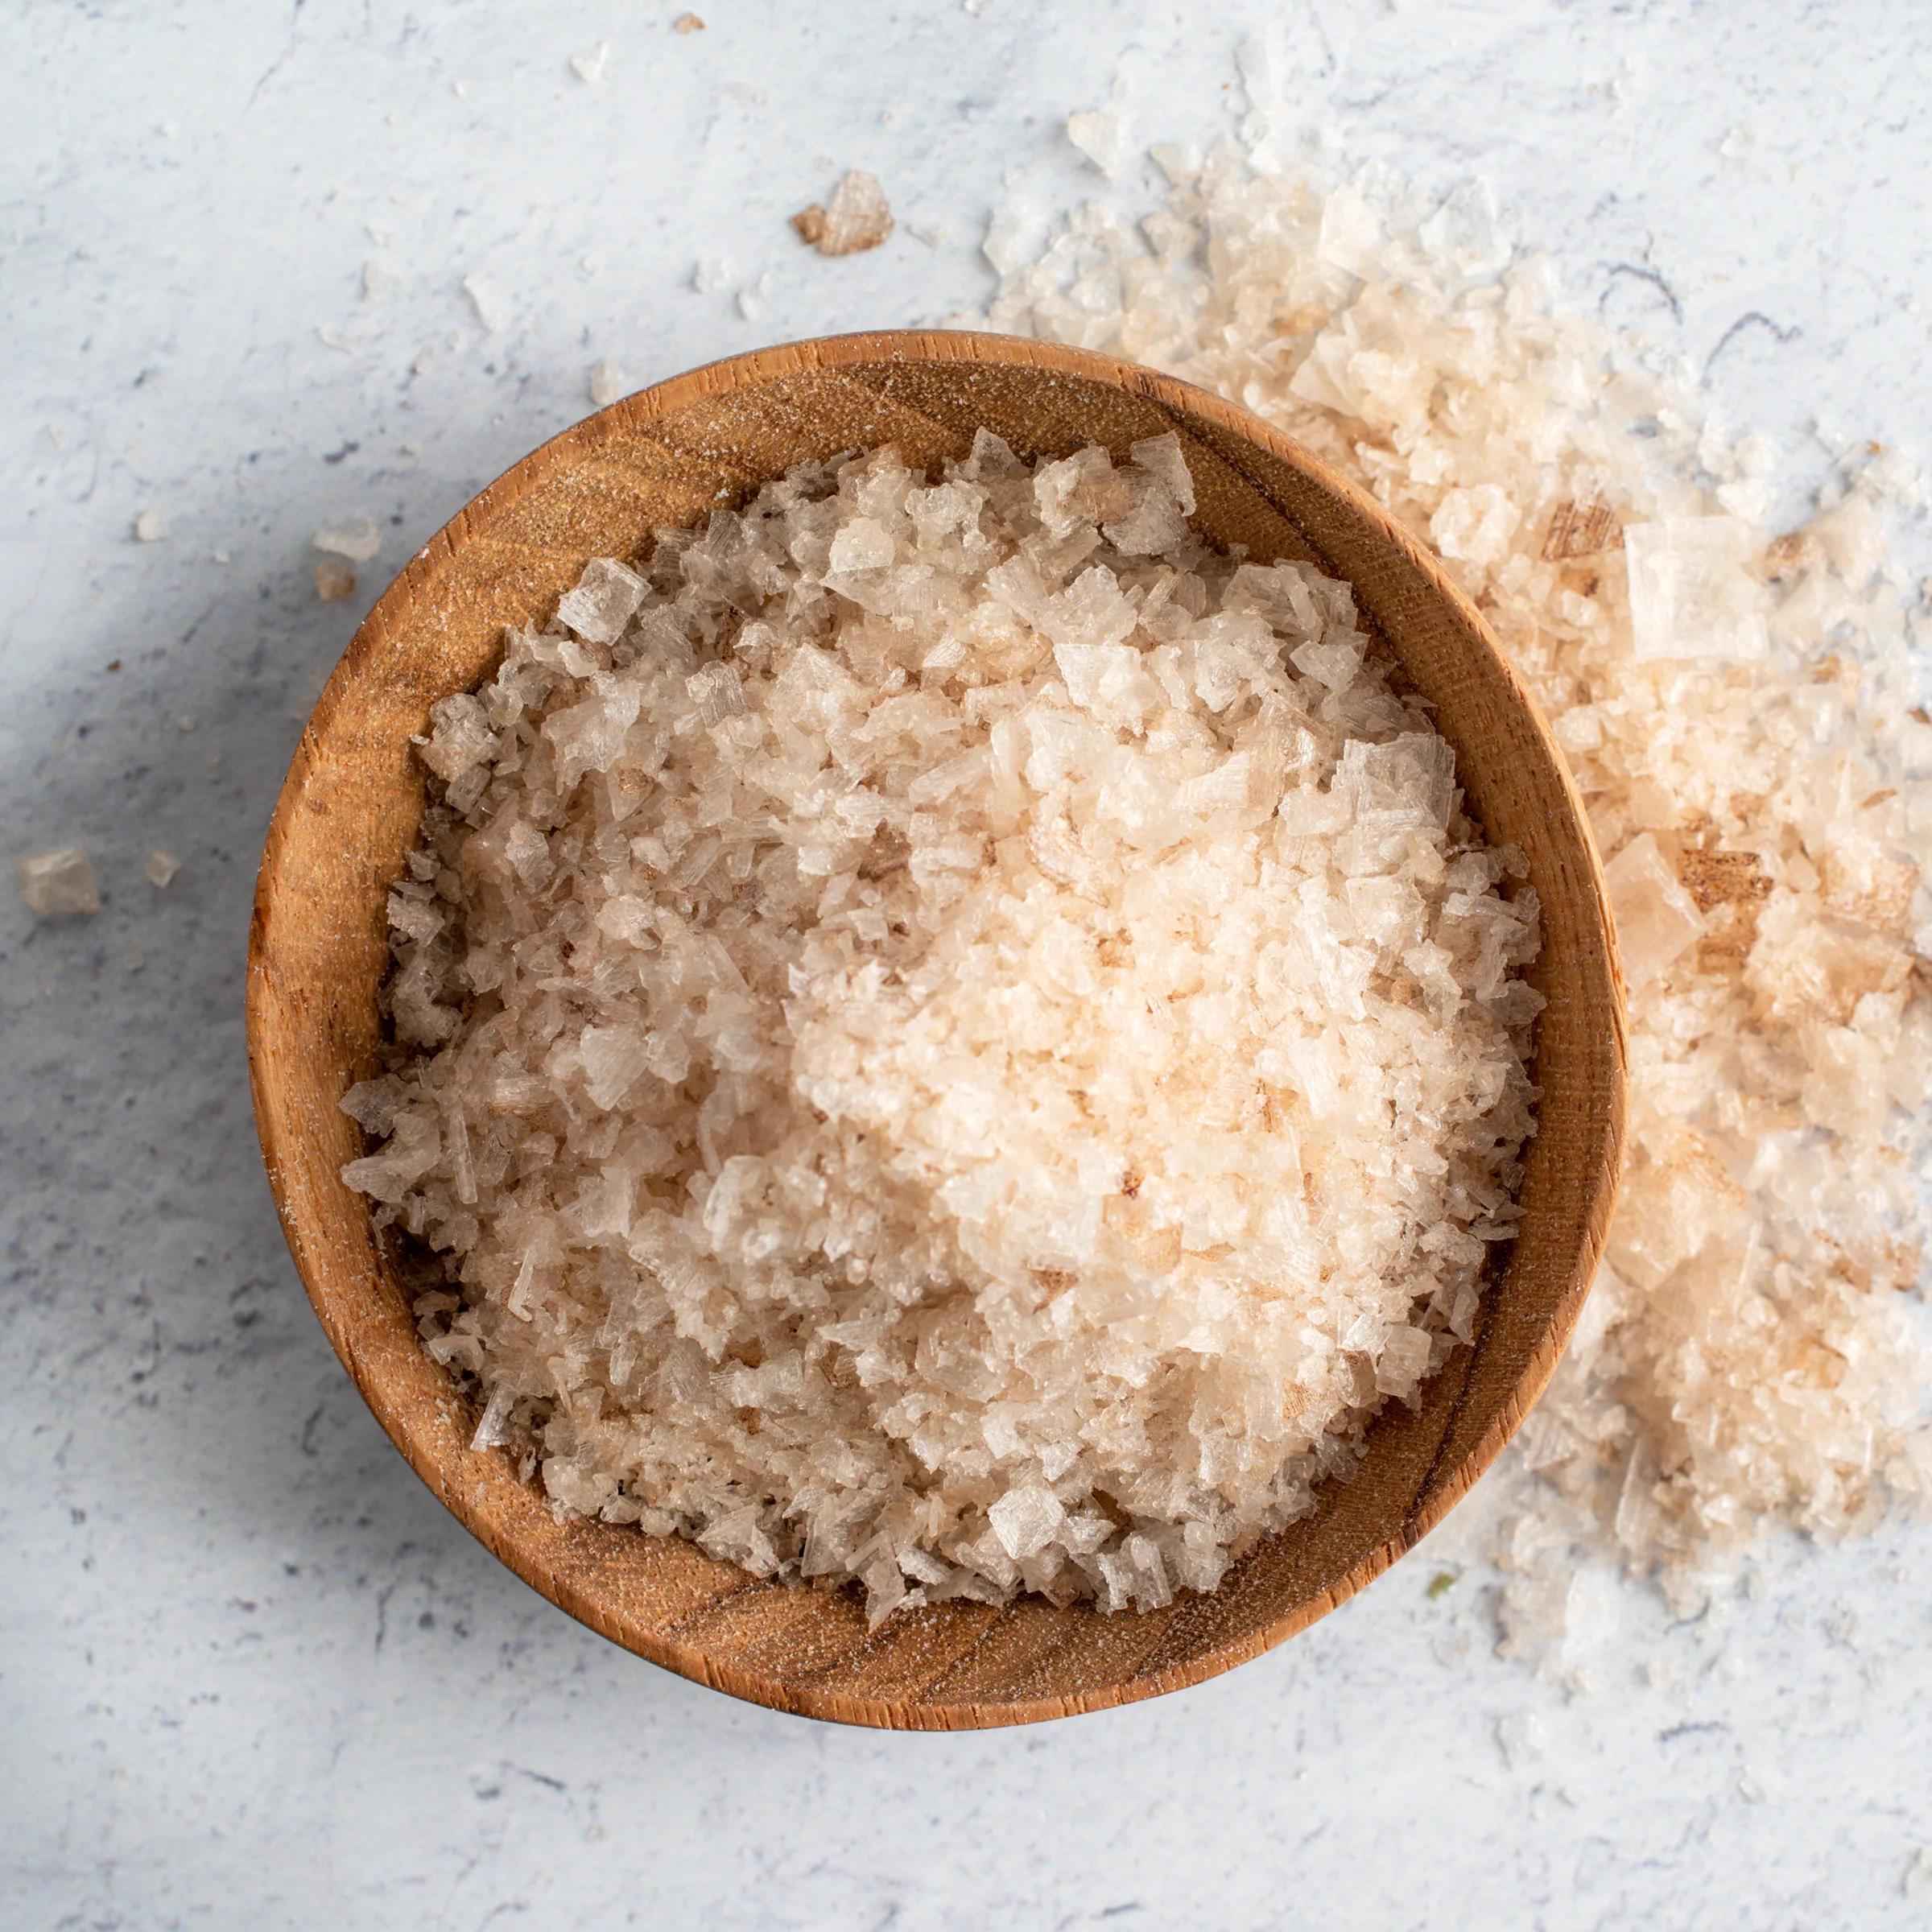 maldon smoked sea salt - What is the benefit of Maldon sea salt